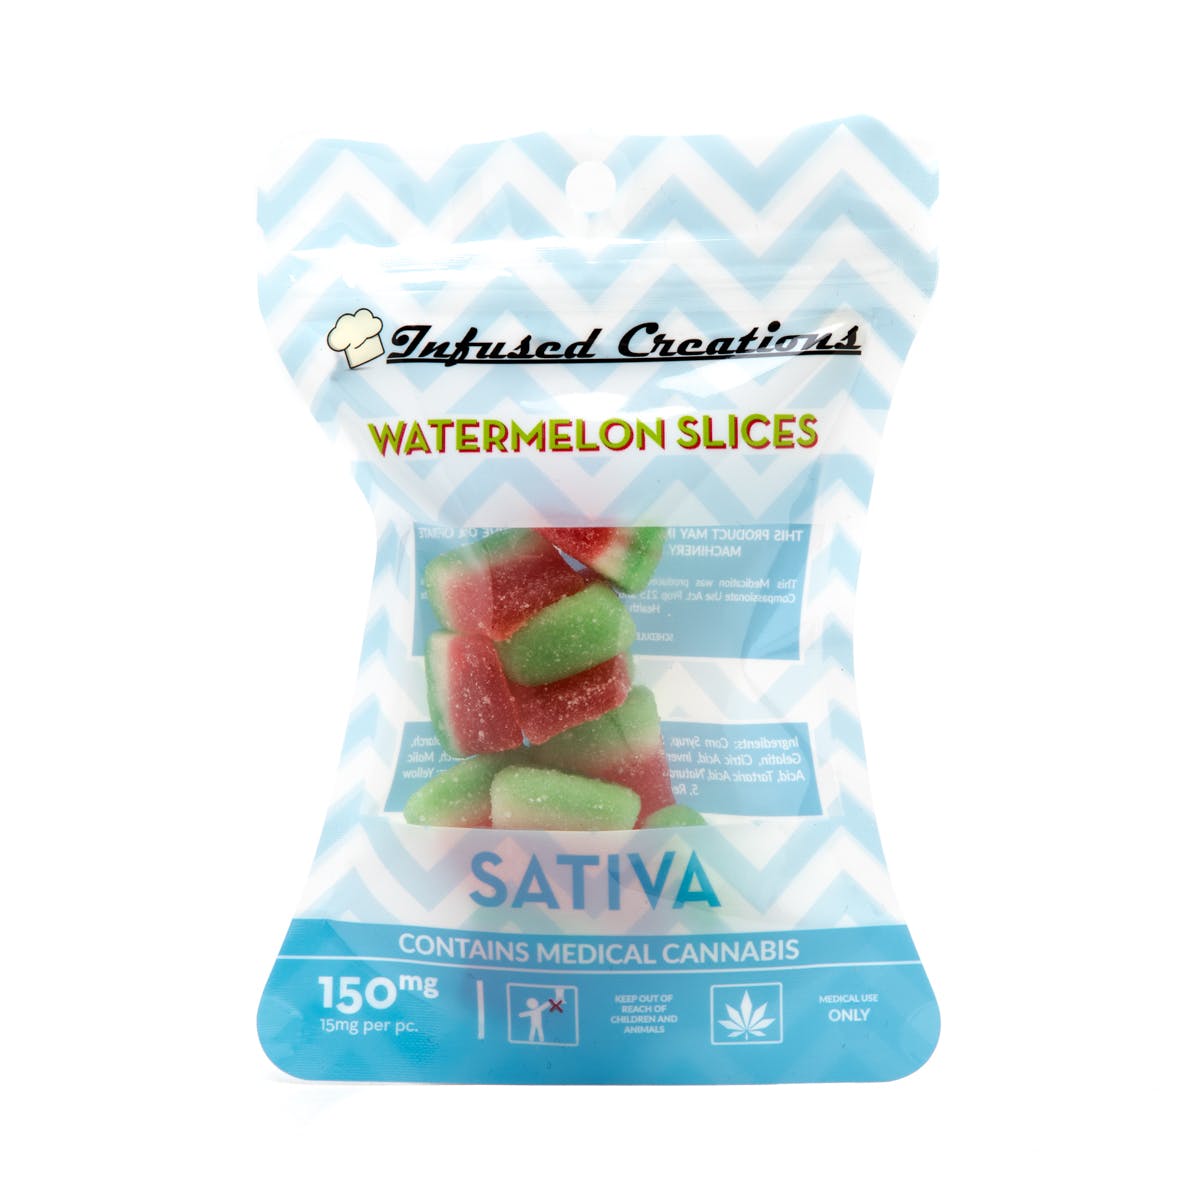 Watermelon Slices Sativa, 150mg